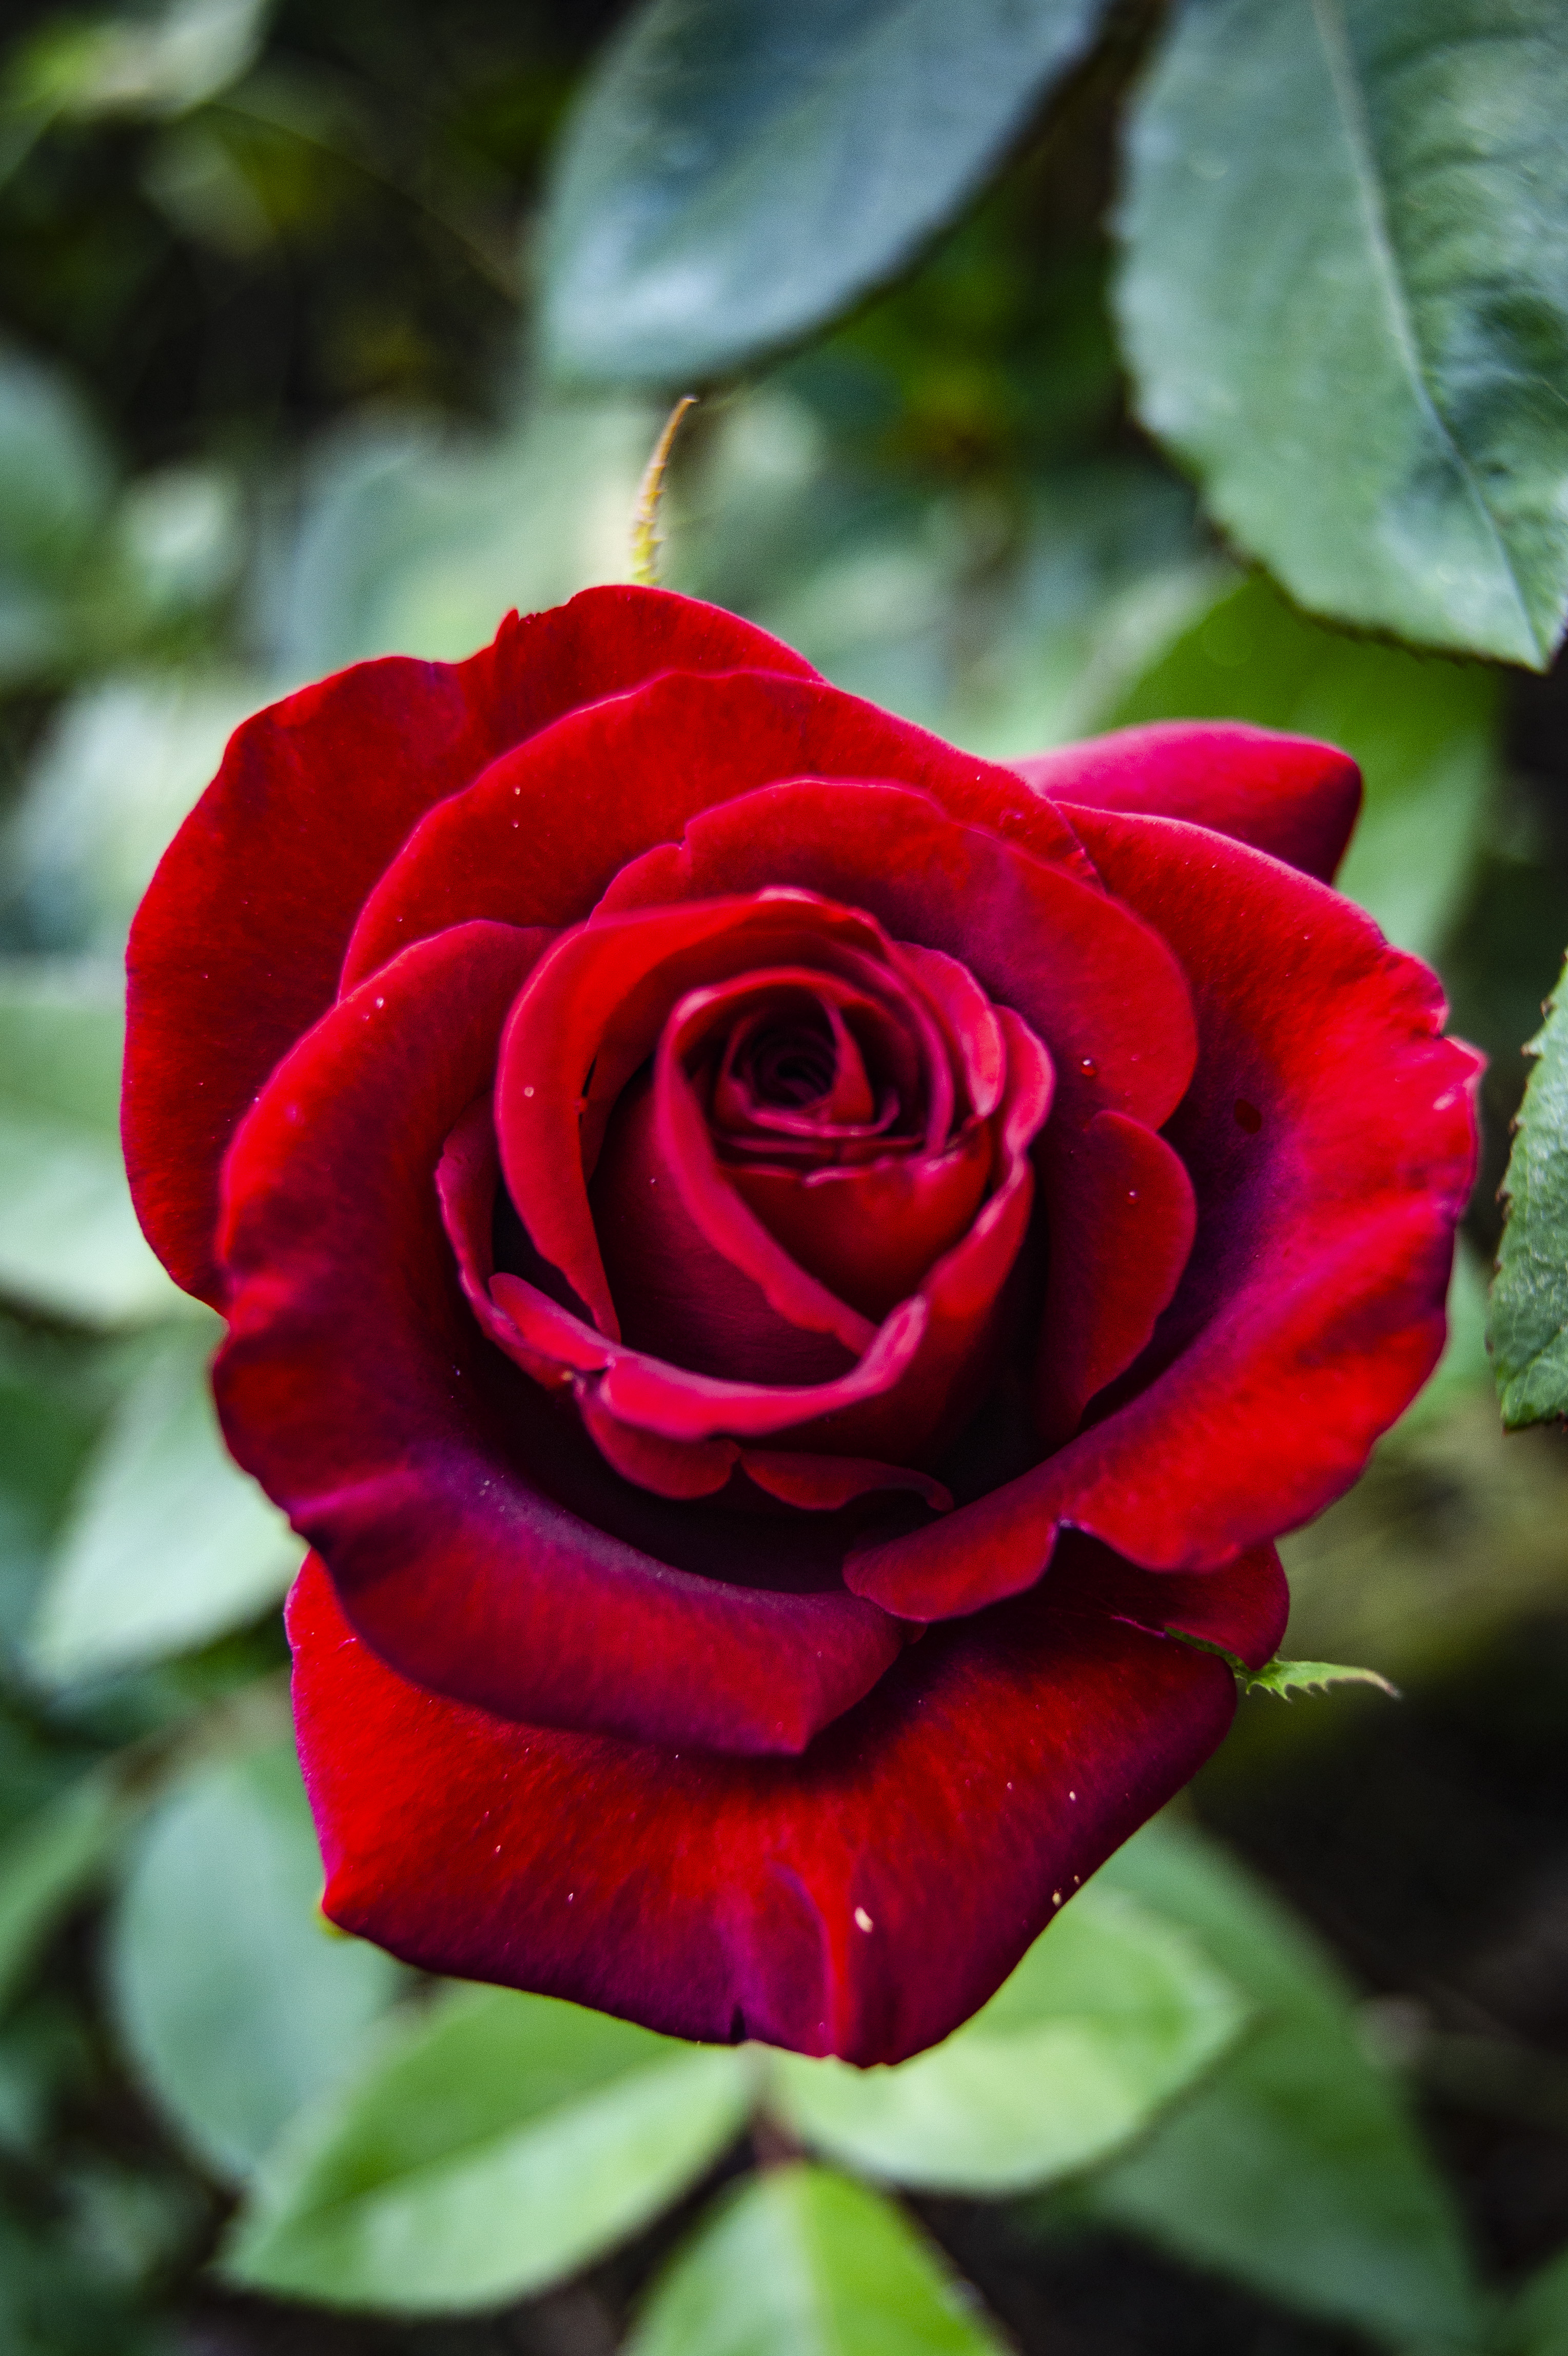 Red, garden rose.On a long stem.